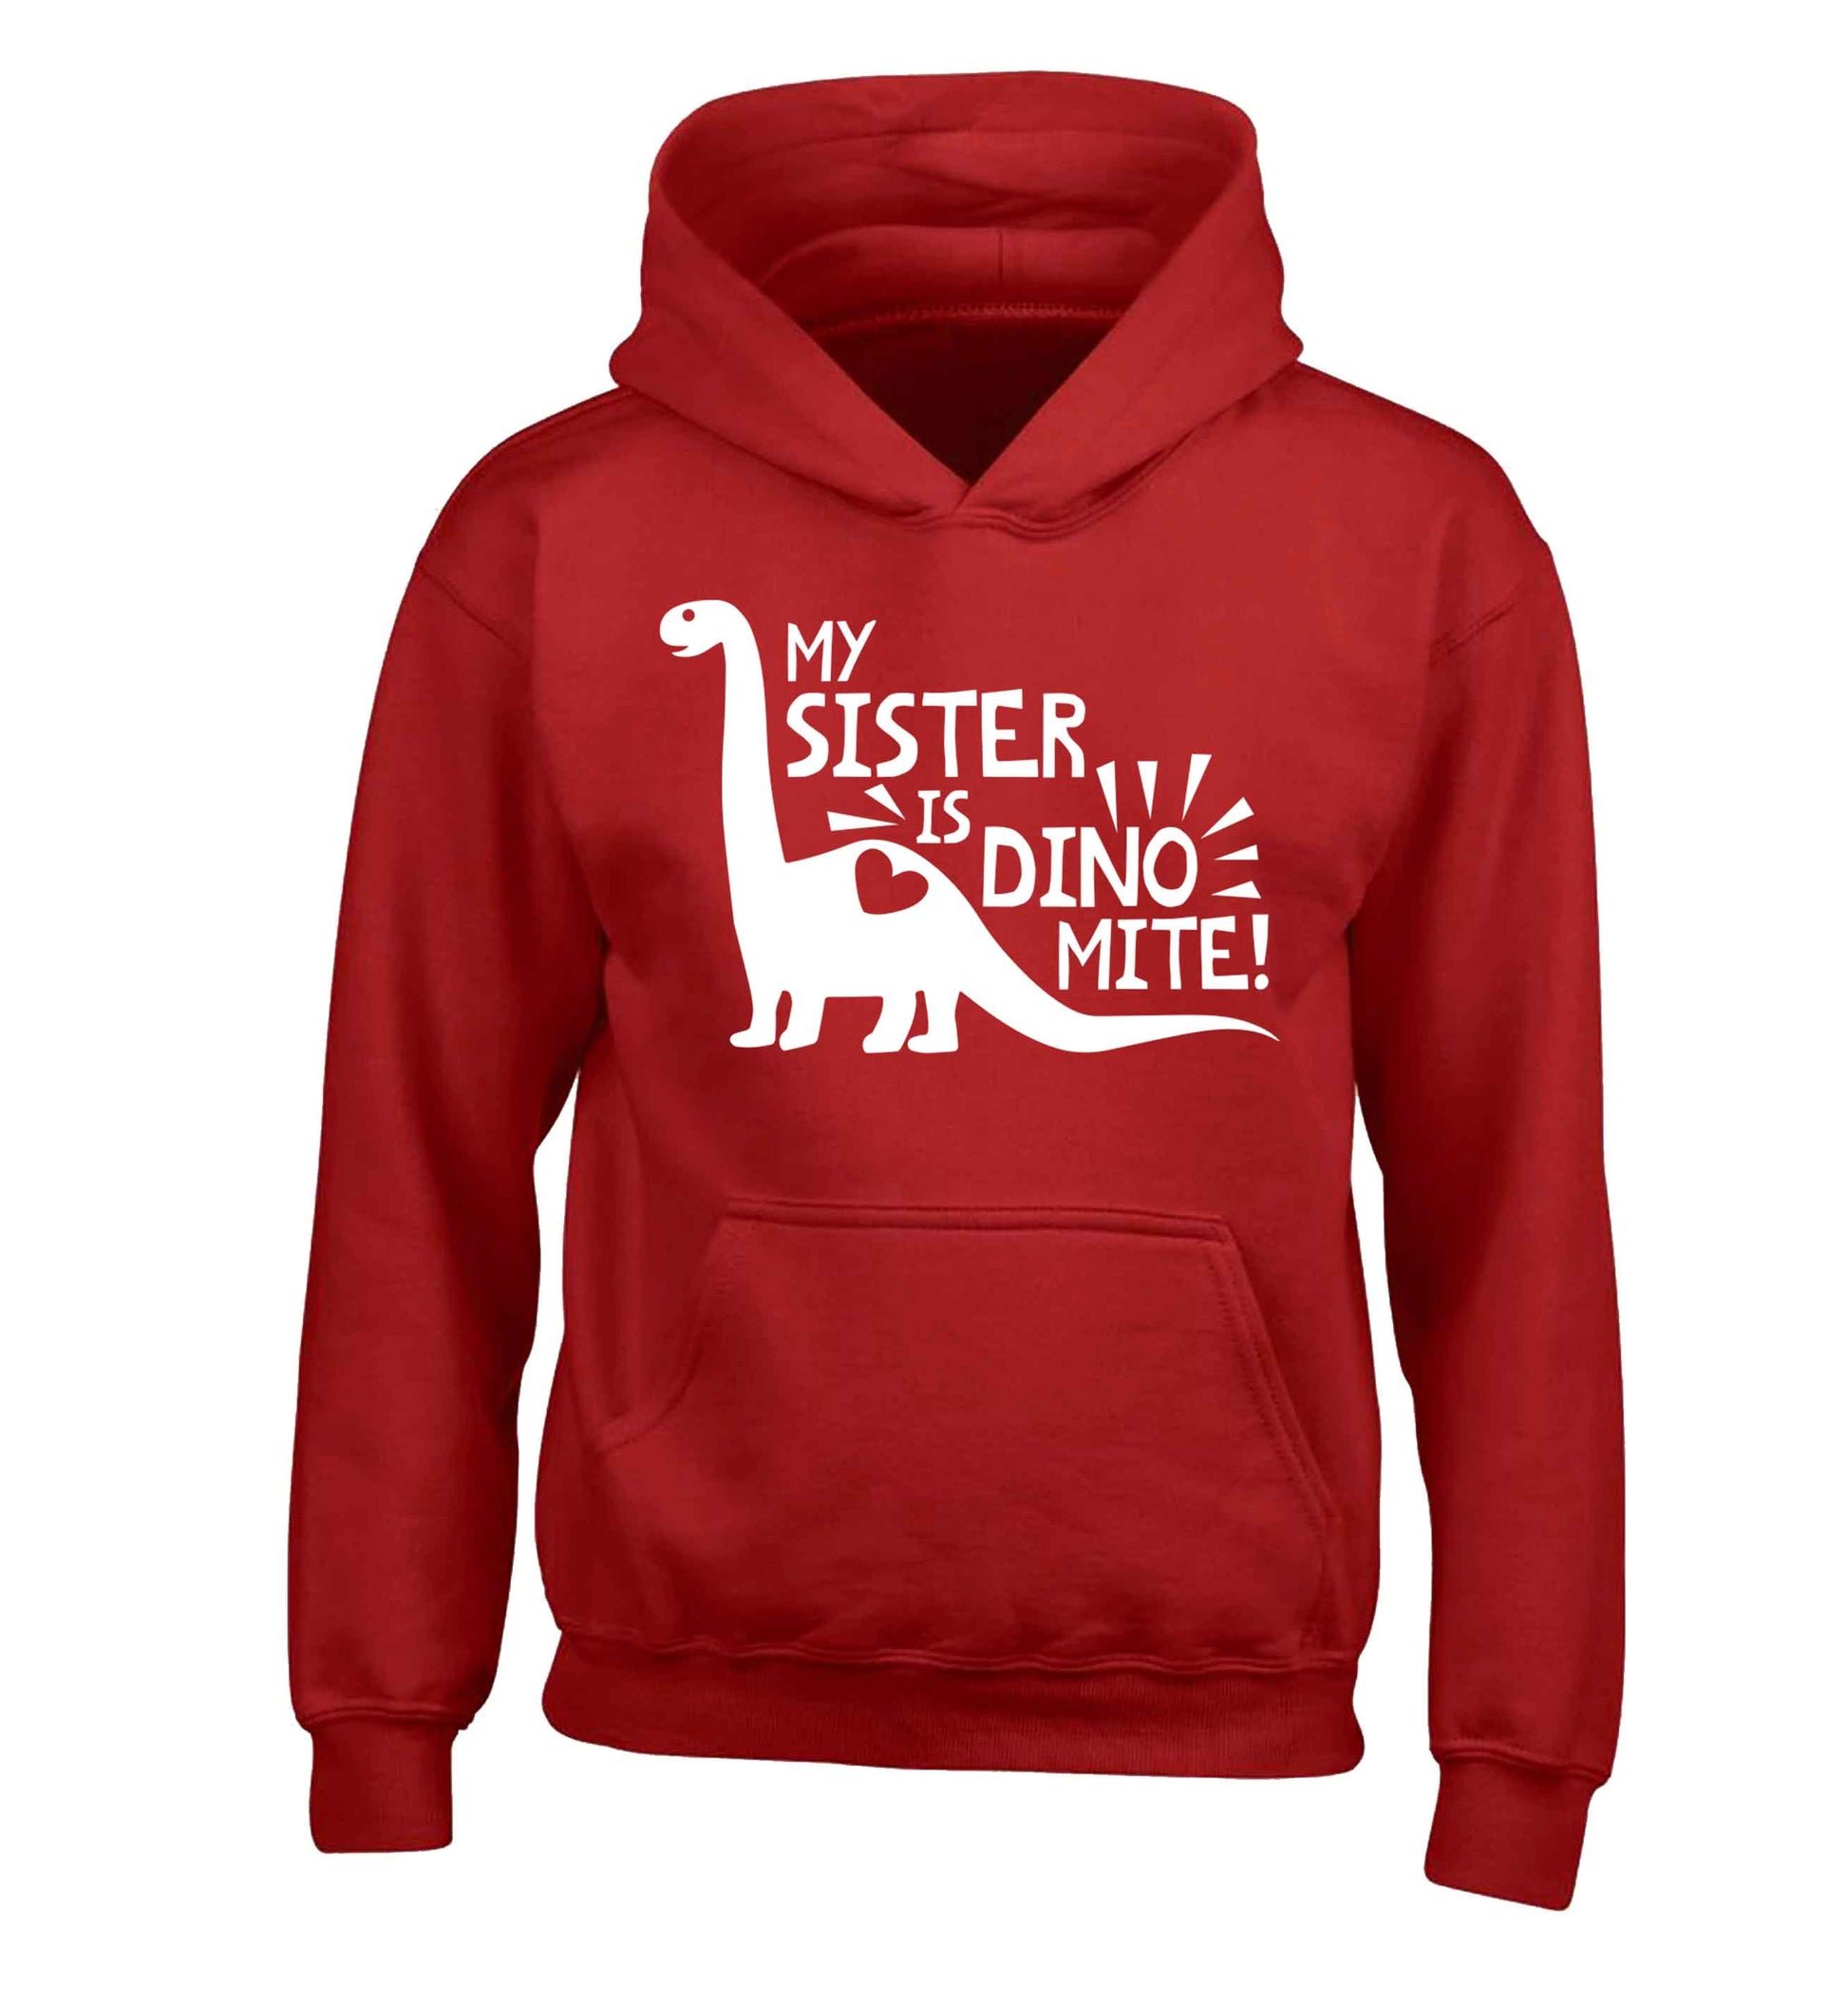 My sister is dinomite! children's red hoodie 12-13 Years